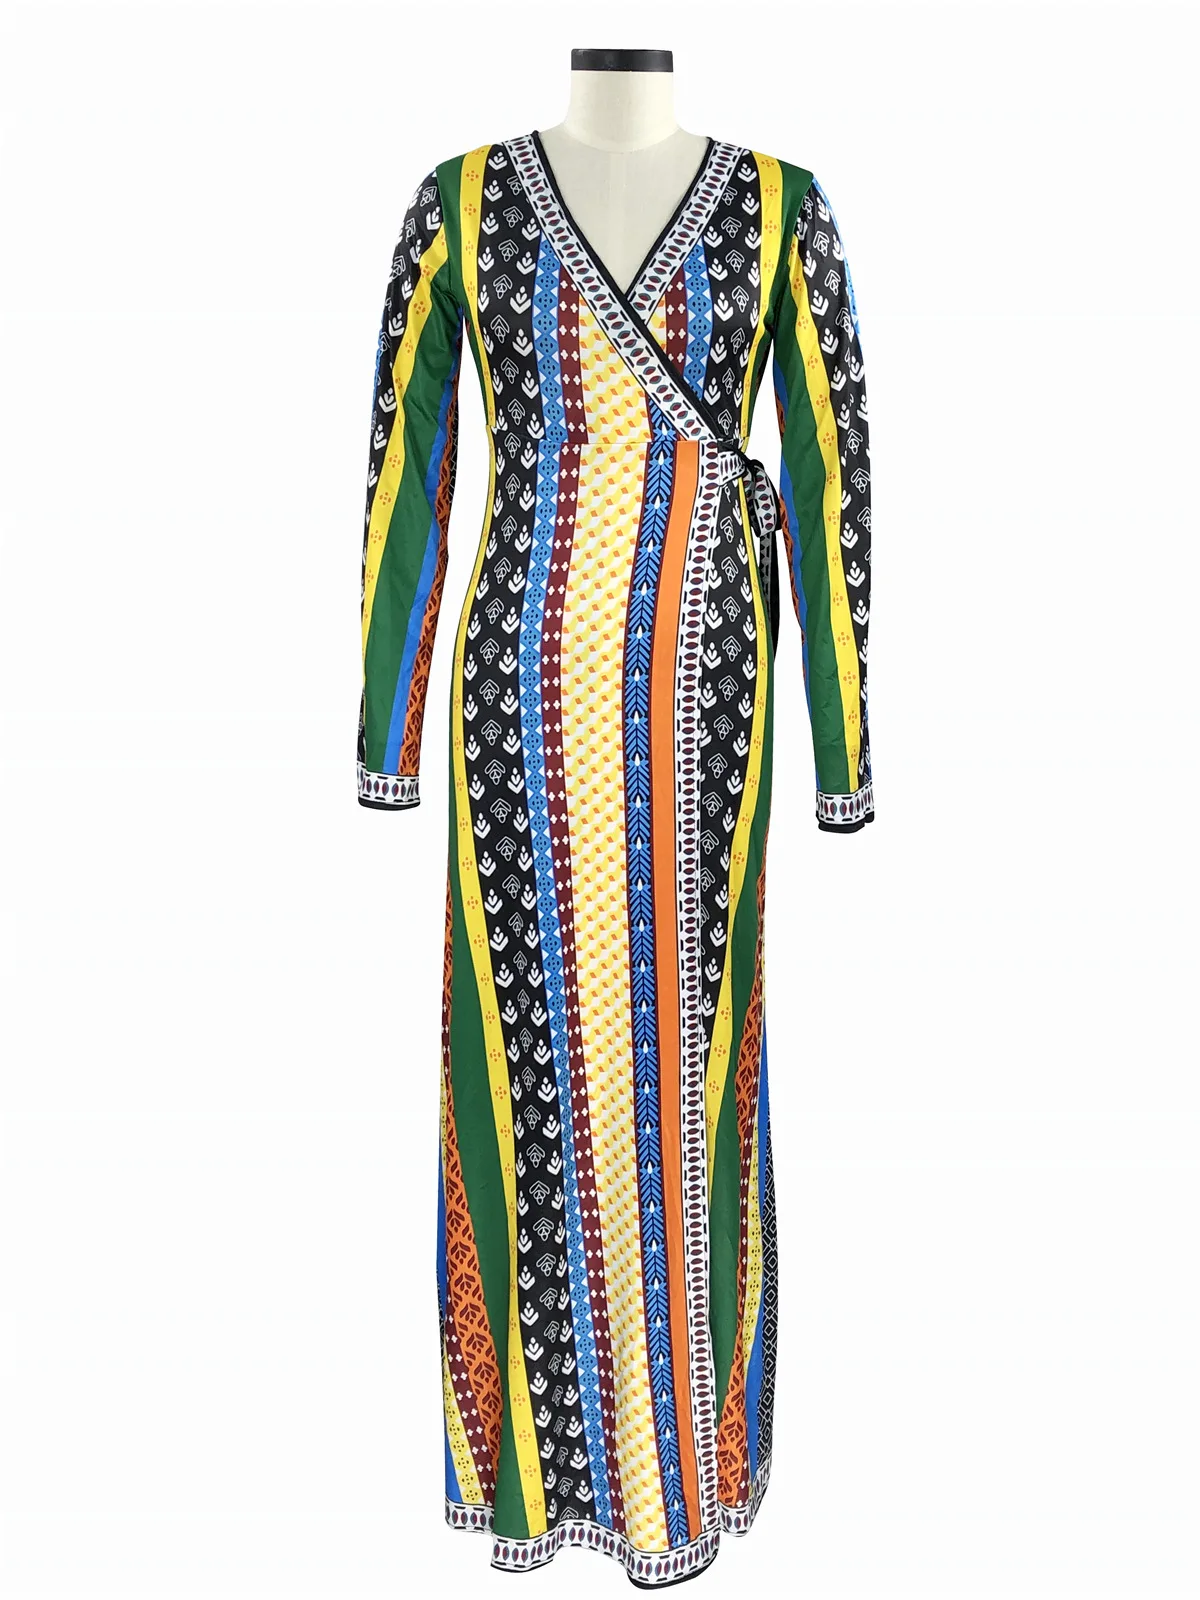 2019 autumn wholesale low price fashion maxi gingham elegant african kitenge long sleeve dress designs women dress